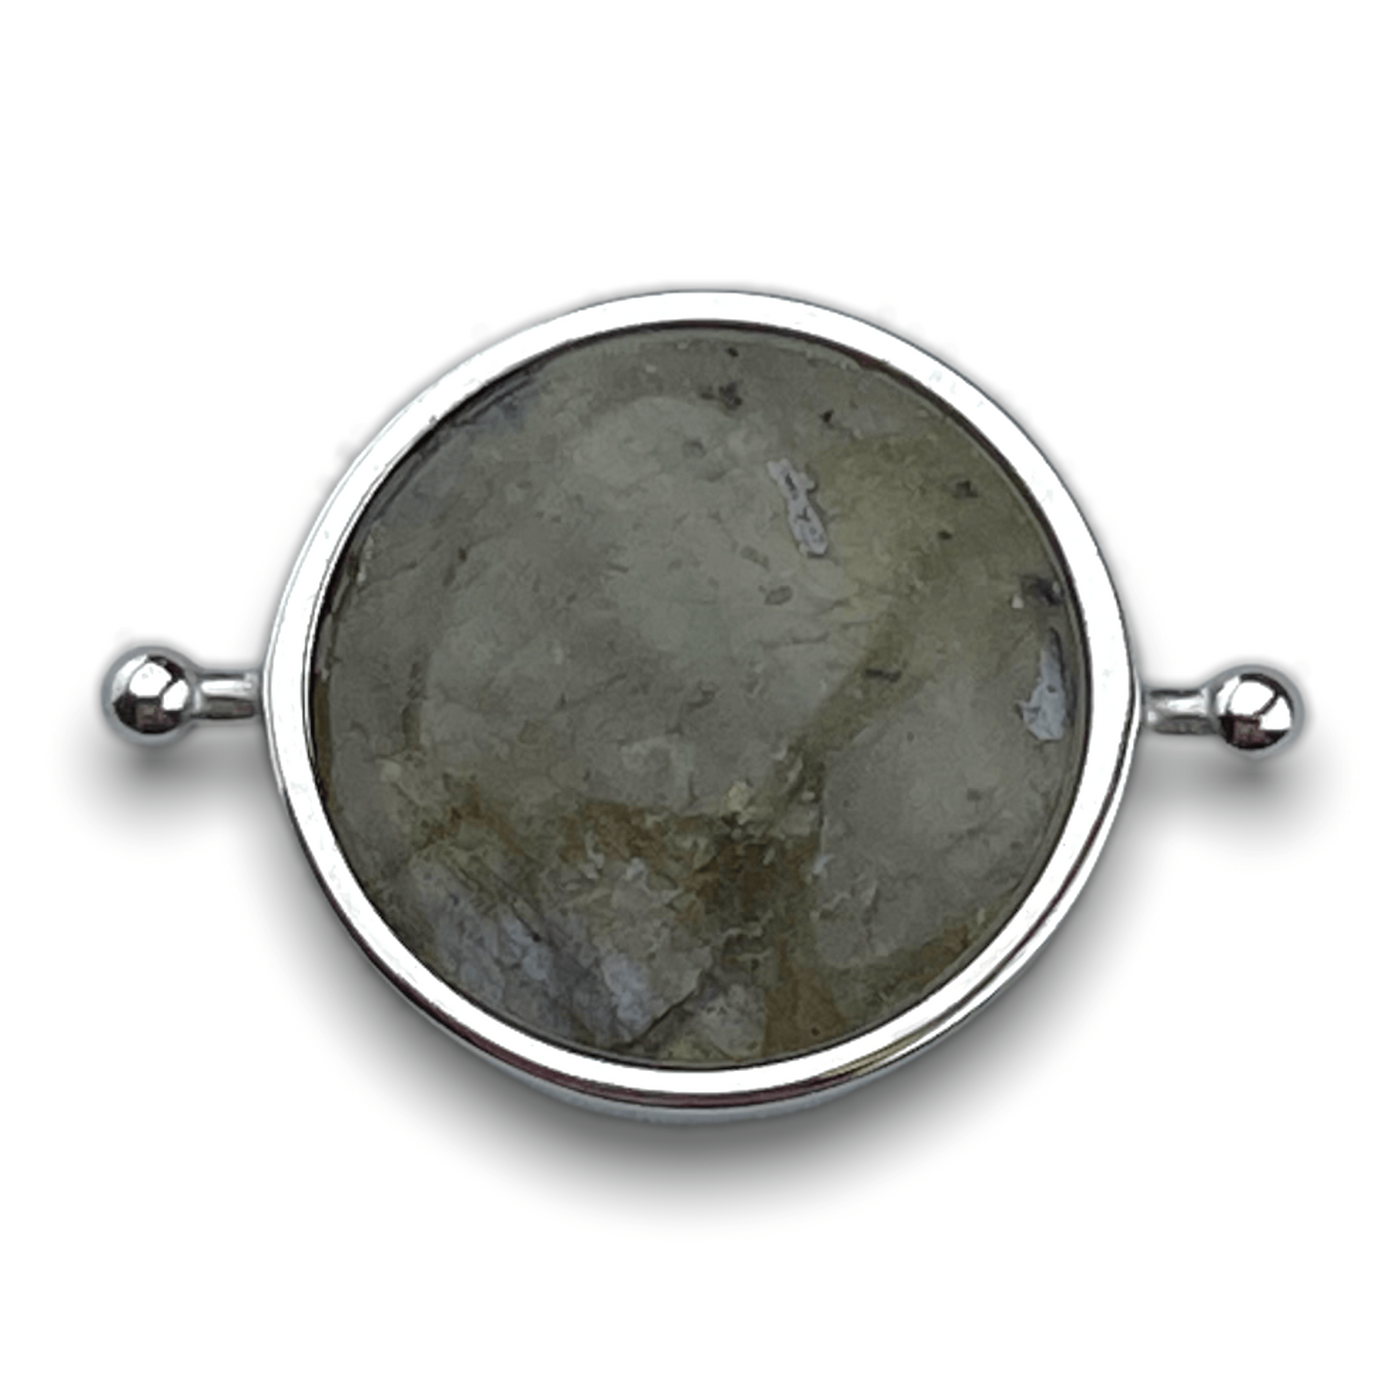 Labradorite Round Crystal Element (standard grade – no labradorescence/flash)